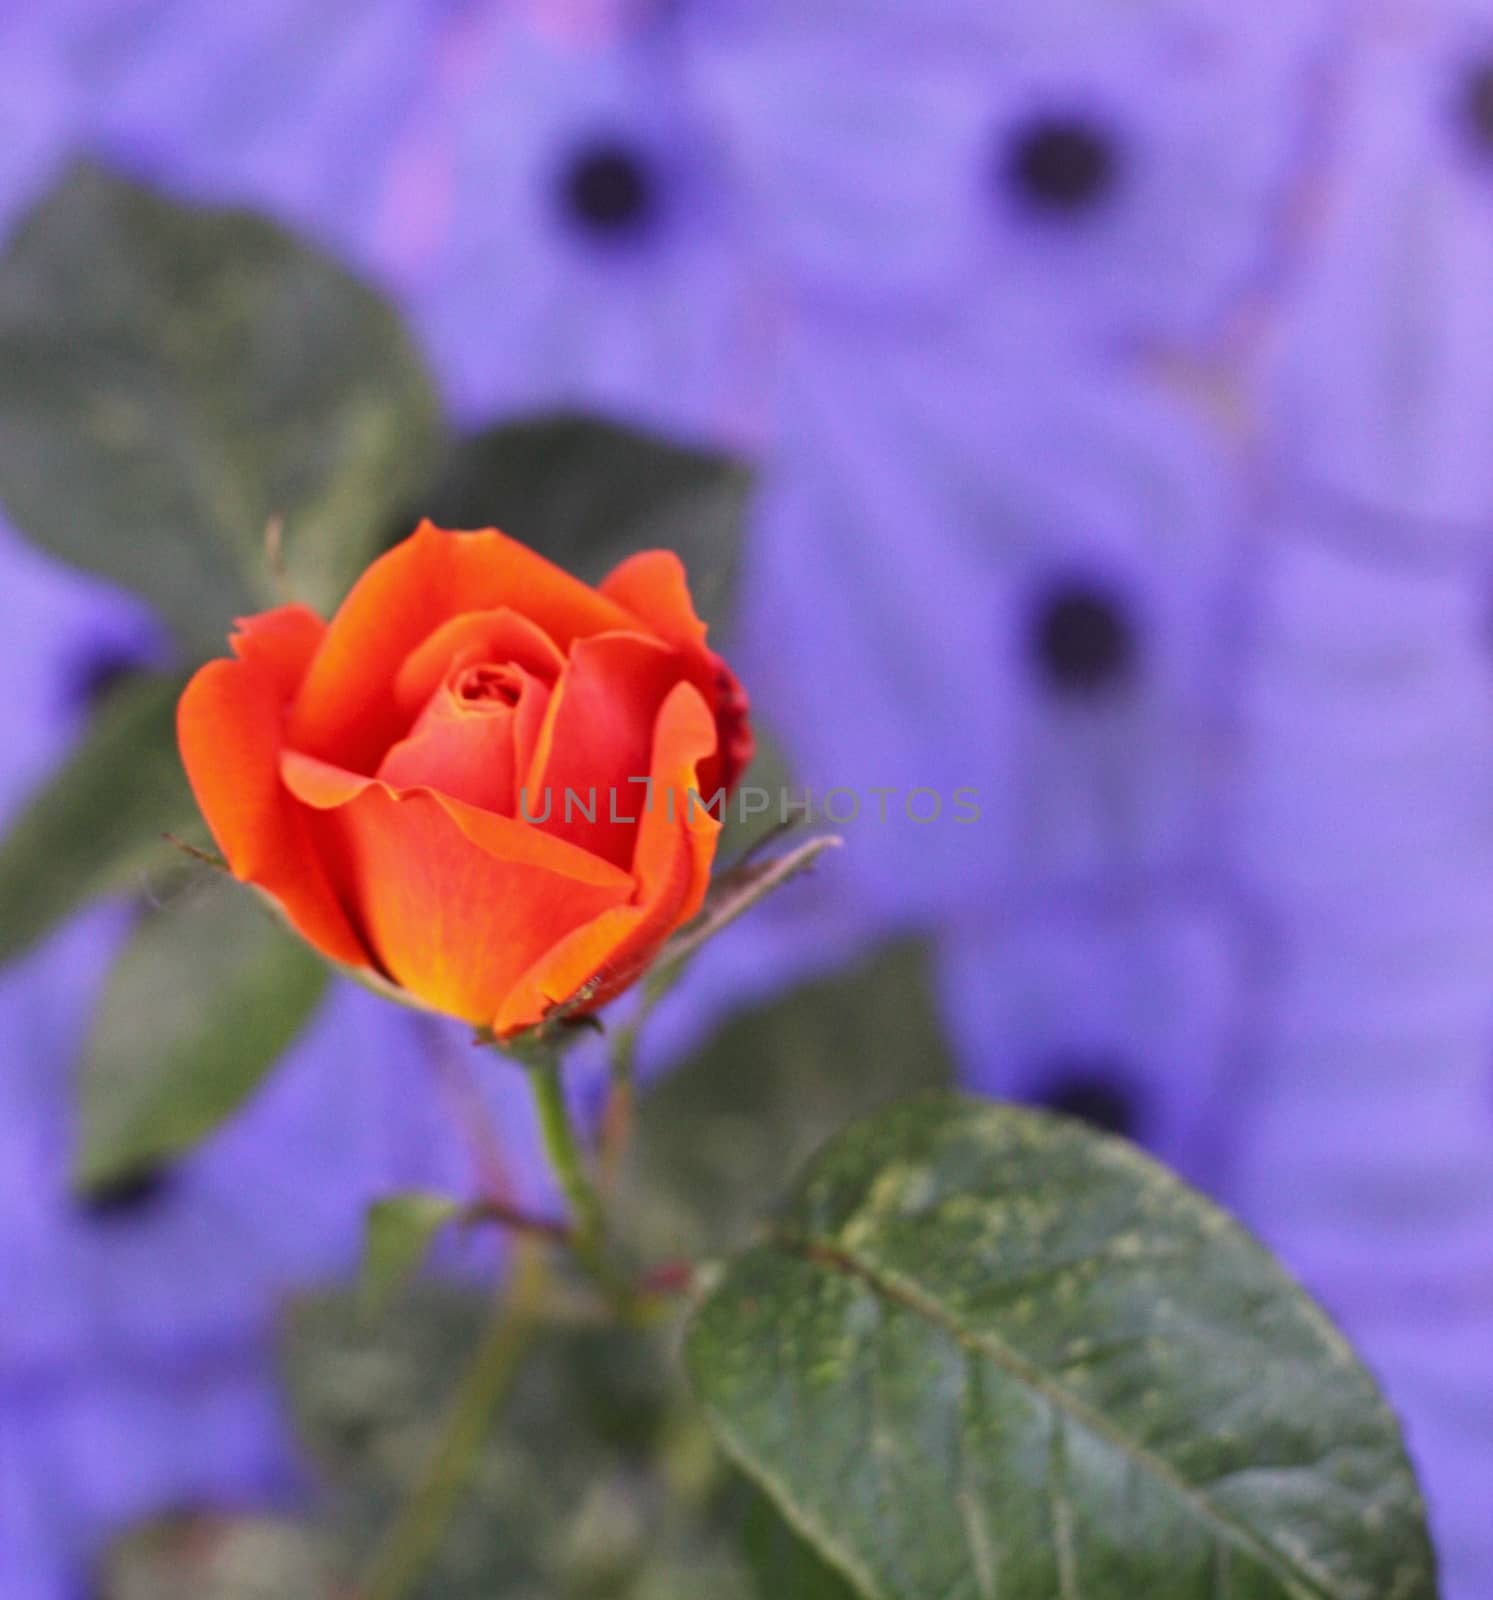 orange rose by jnerad